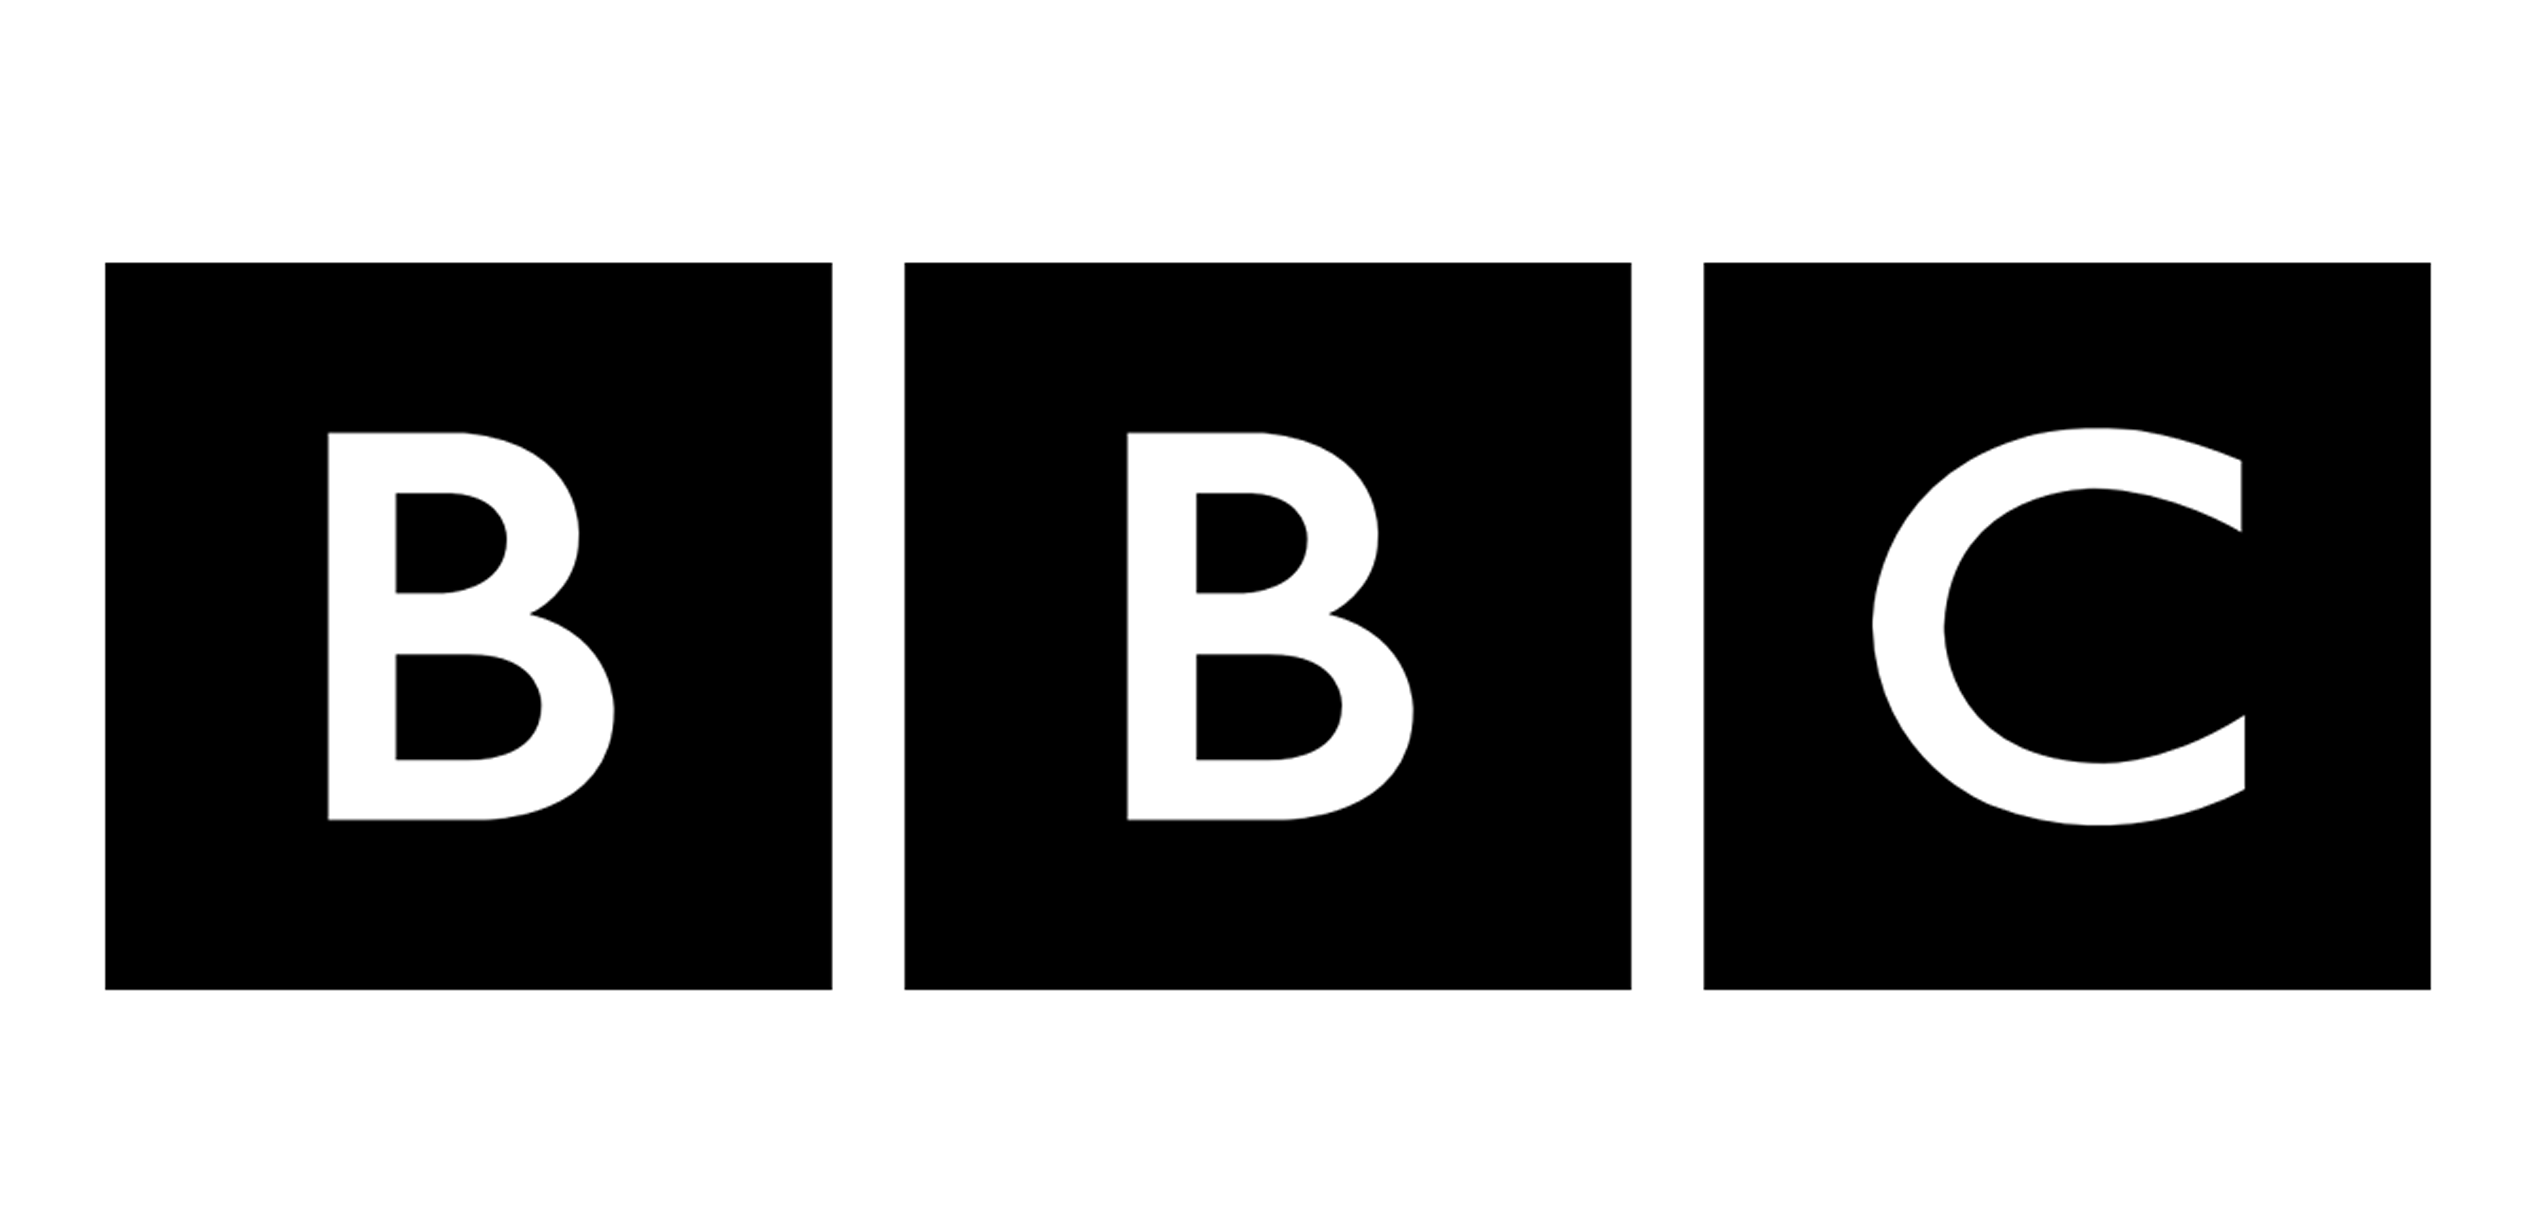 BBC - Court Attire for Women